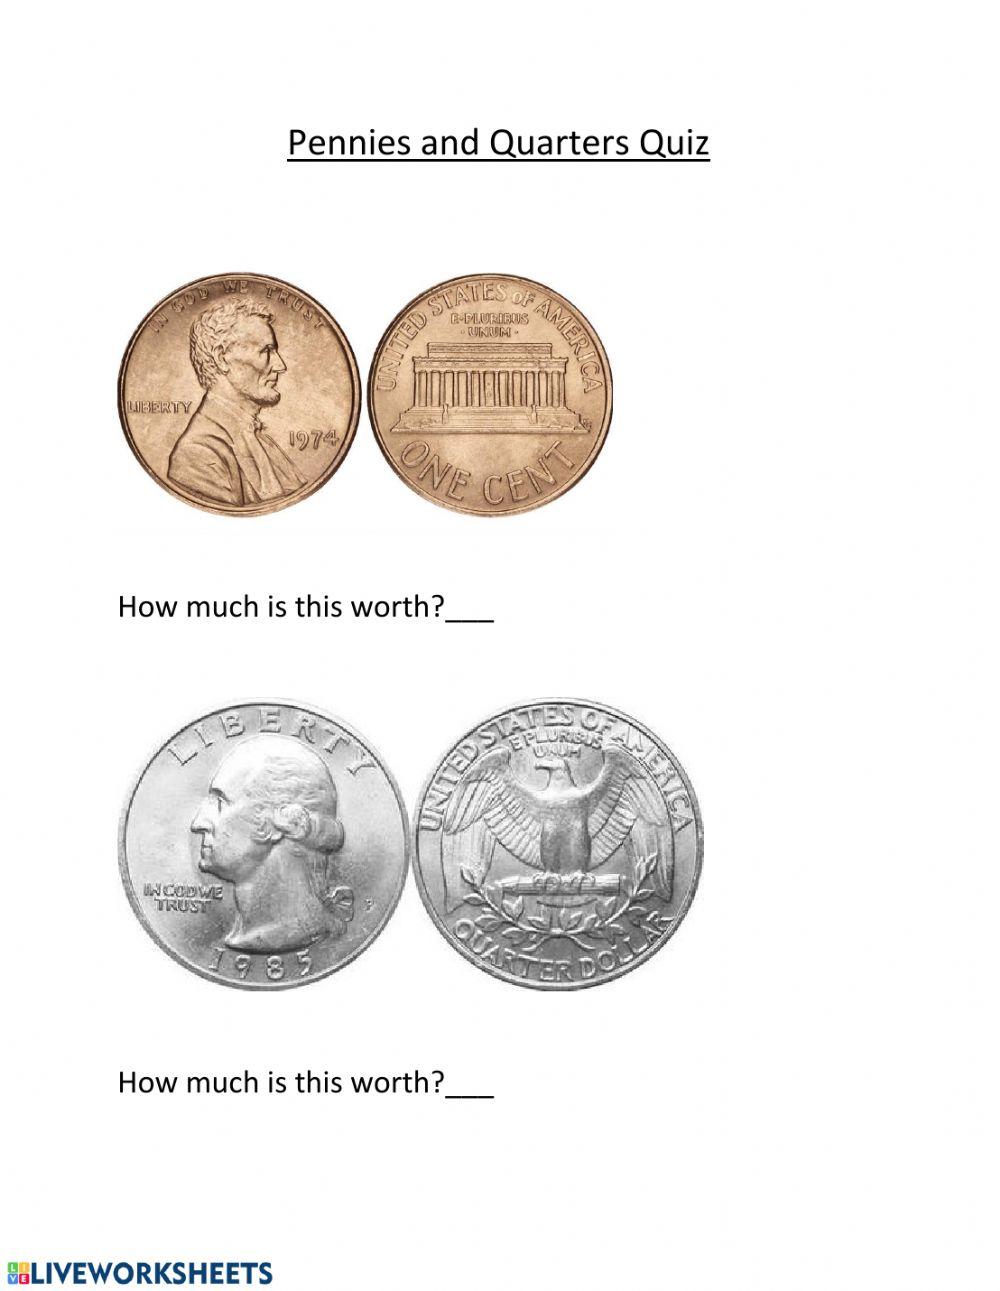 Penny & Quarter Quiz 1